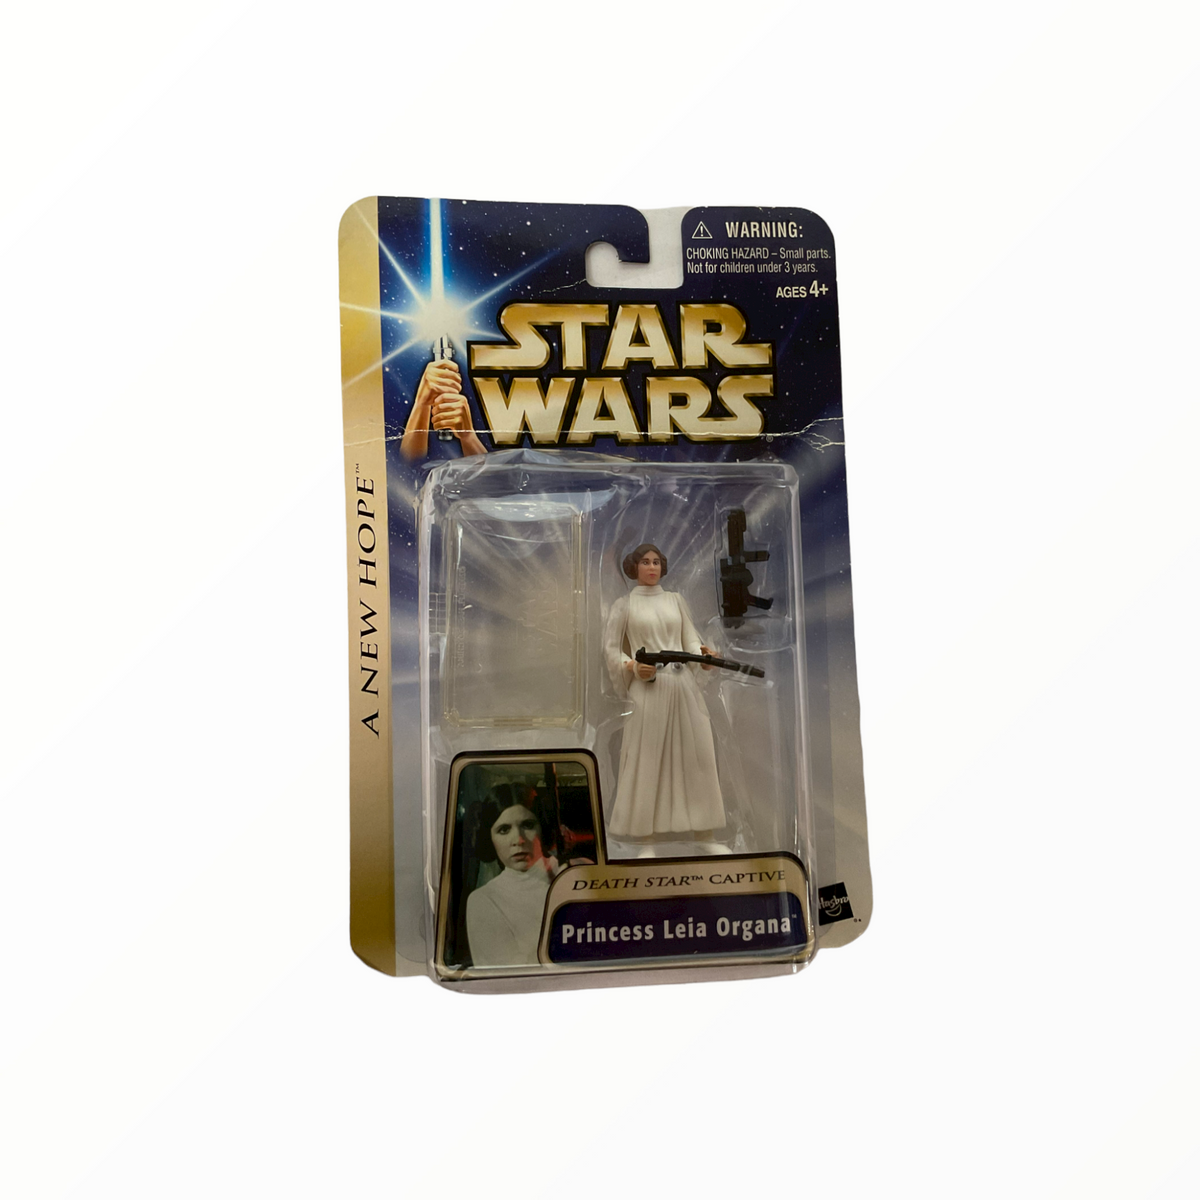 Princess Leia Organa - Death Star Captive - New Hope